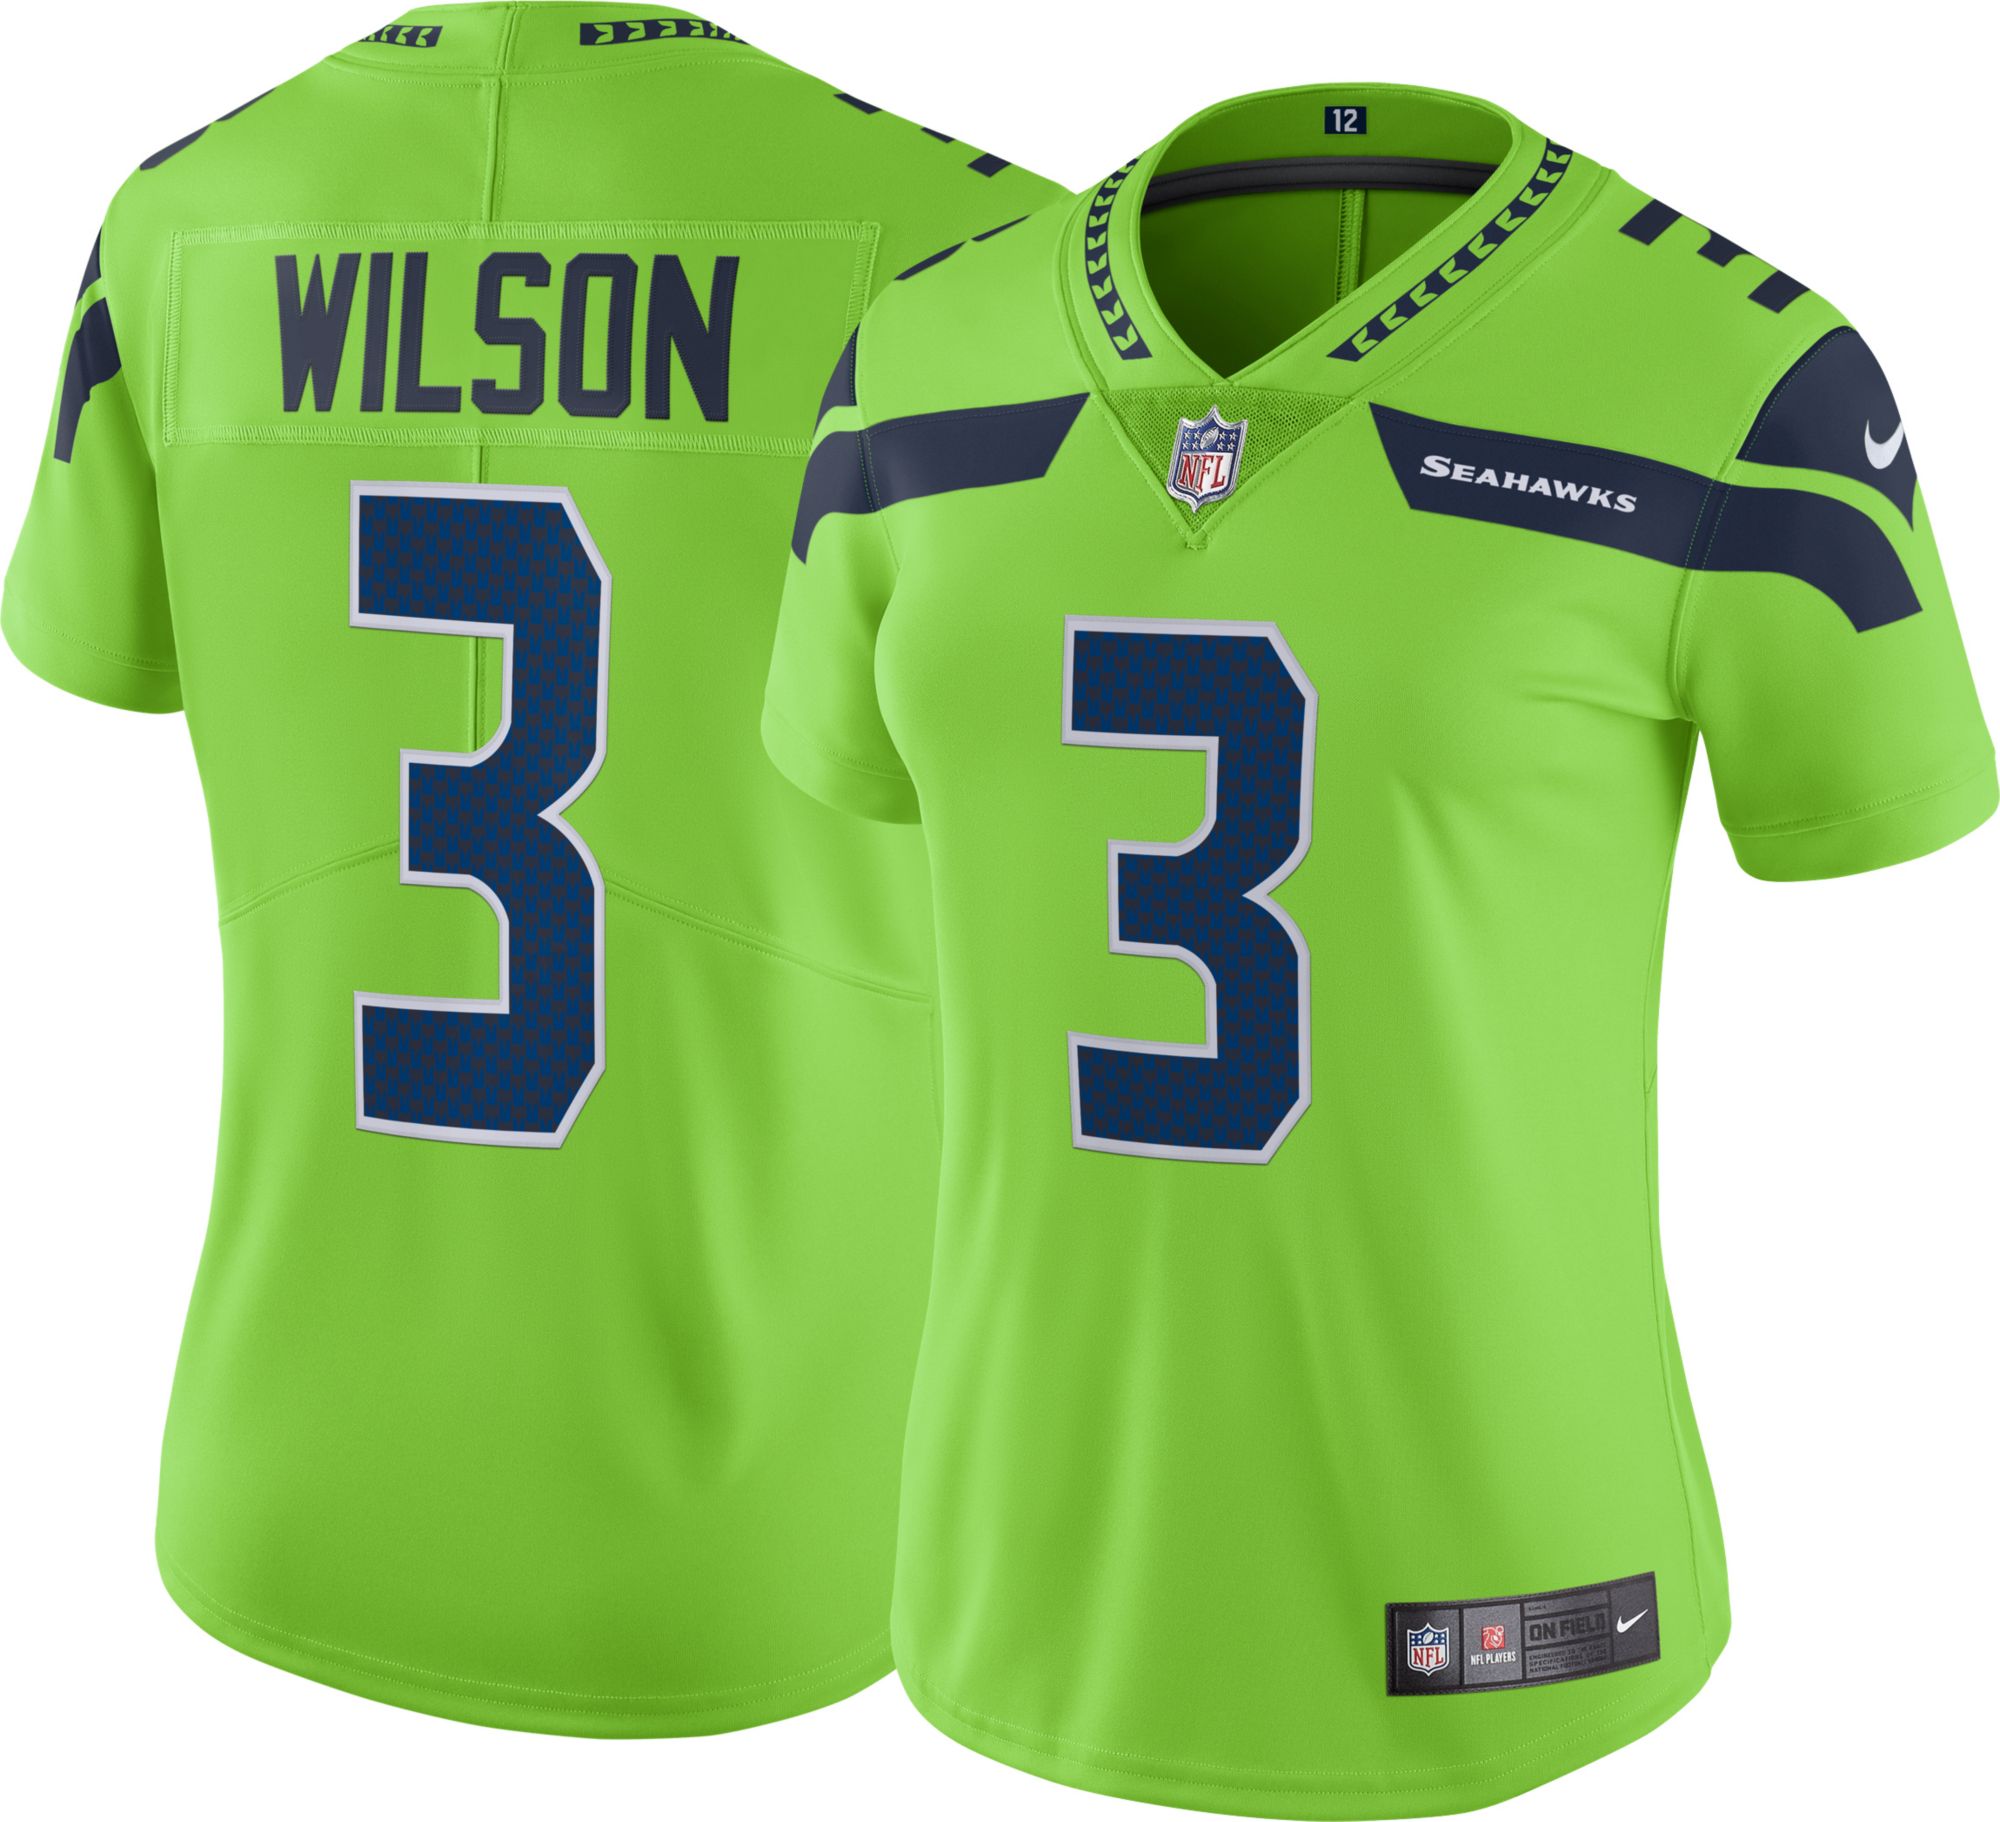 russell wilson jersey sales